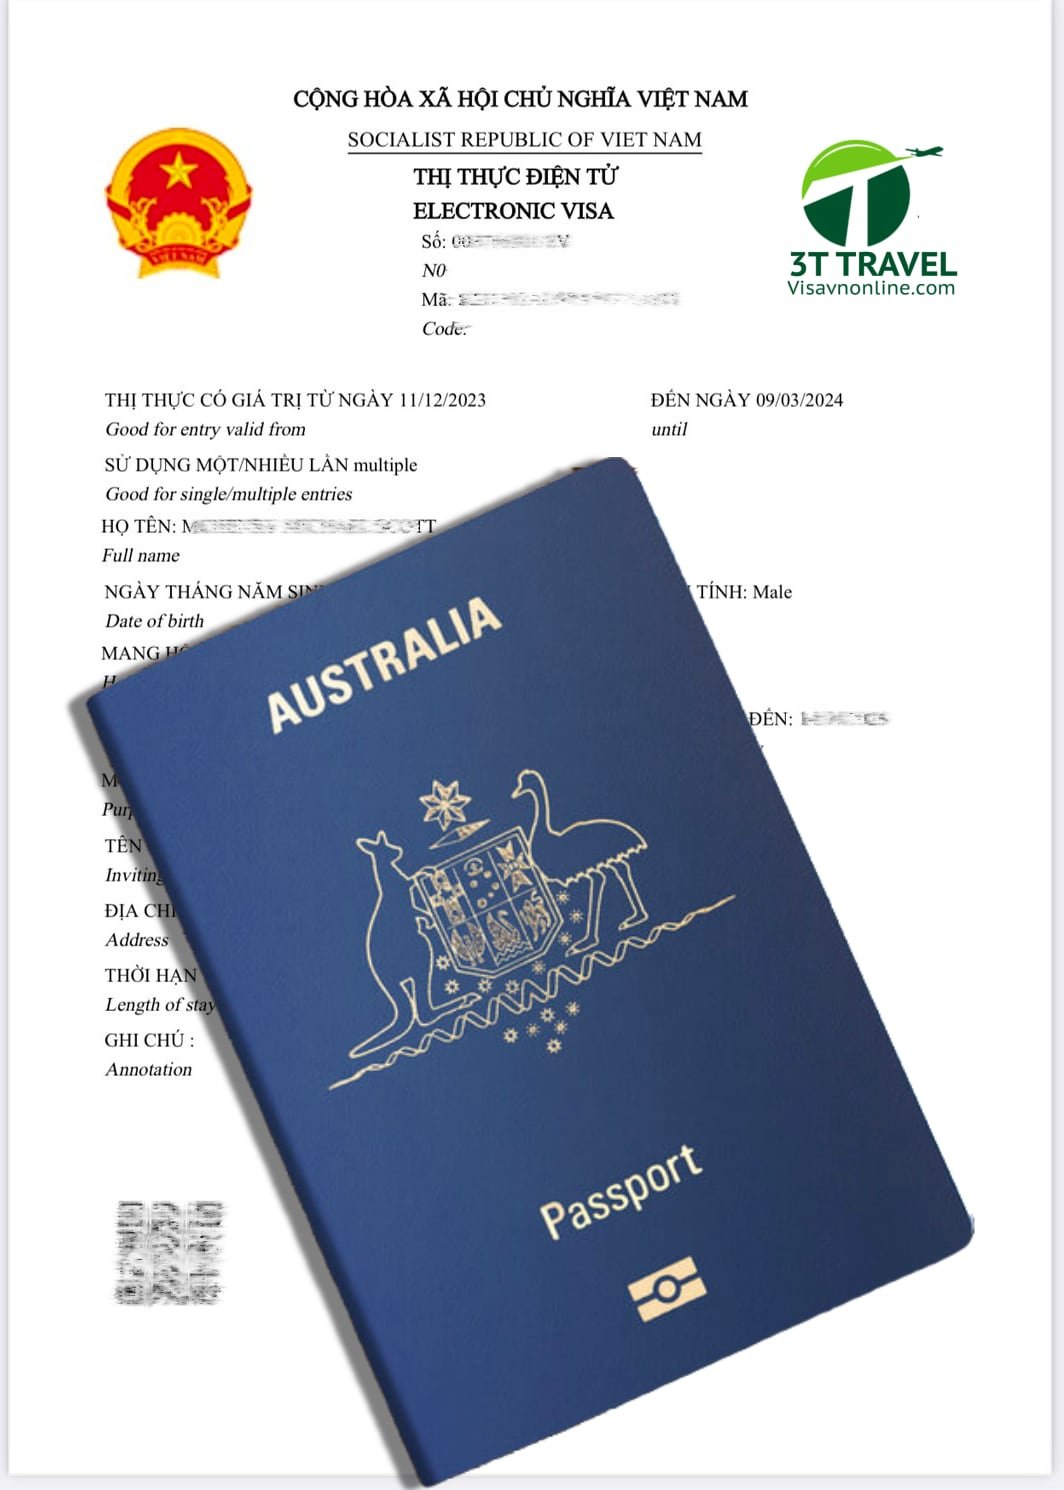 How to Apply for VietNam Visa from Australia